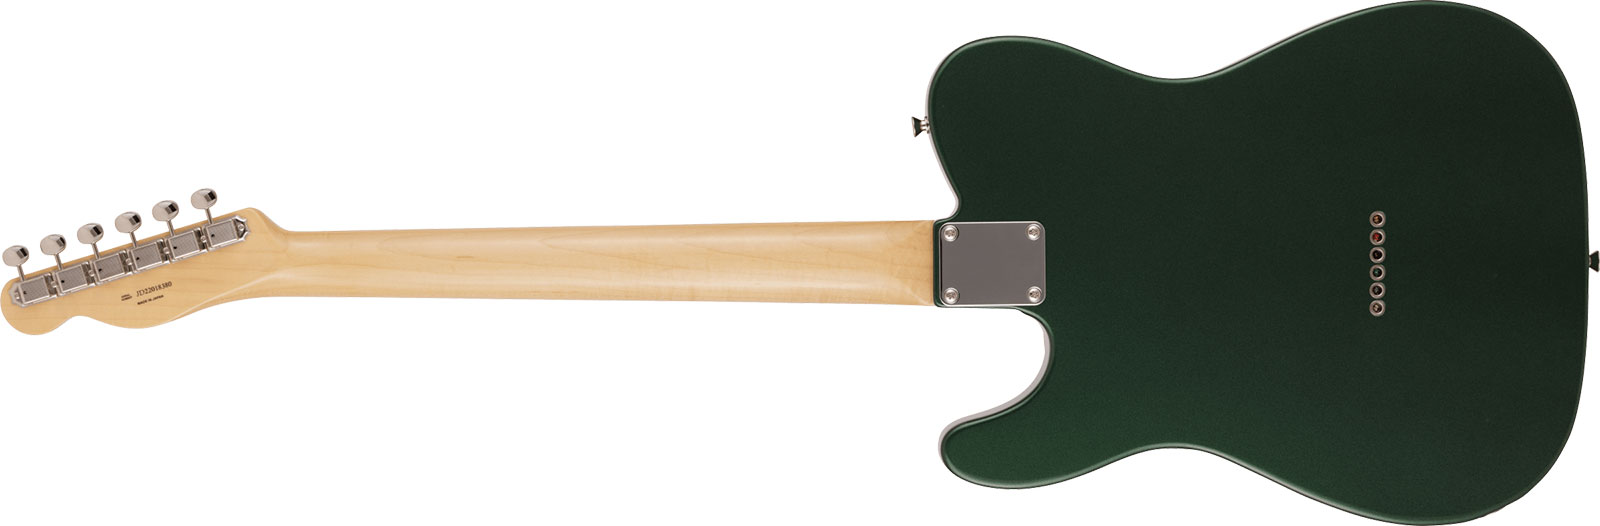 Fender Tele Traditional 60s Mij 2s Ht Rw - Aged Sherwood Green Metallic - E-Gitarre in Teleform - Variation 1